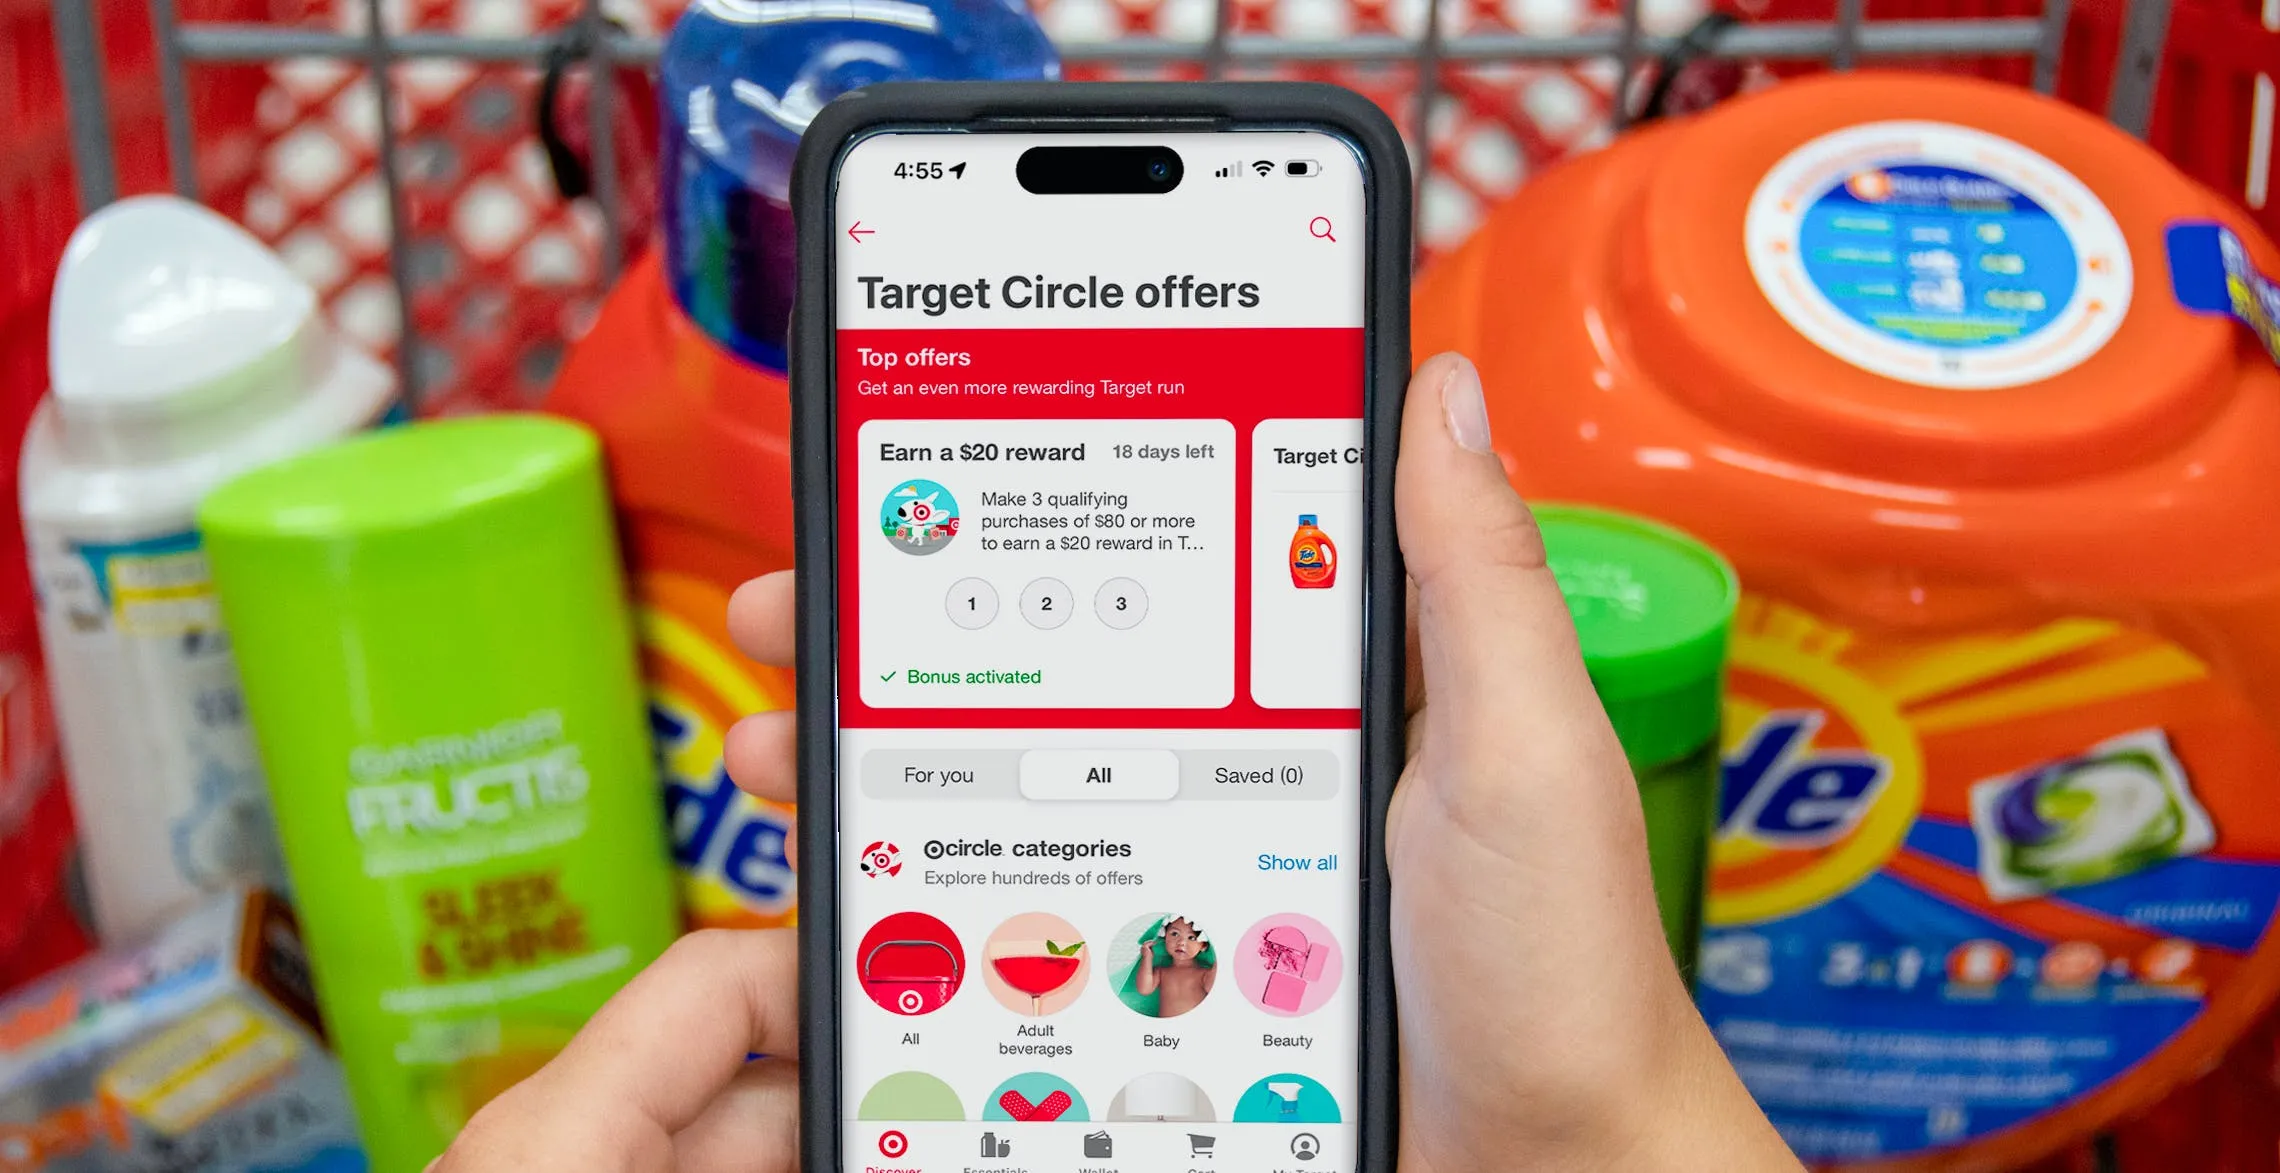 How to Use Target Circle: Saving Money While Shopping